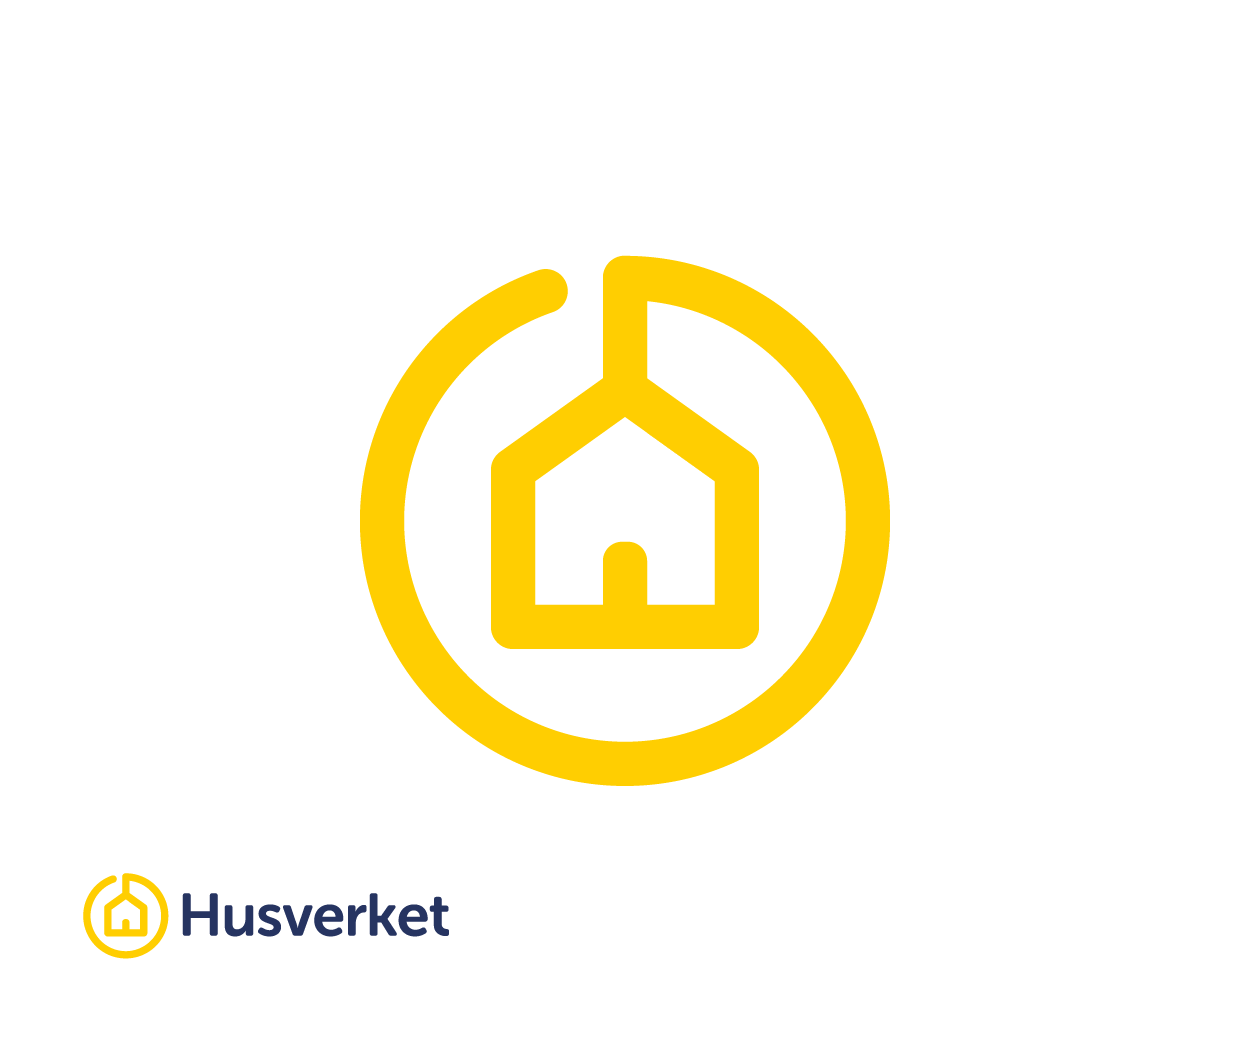 Husverket - a house supplier Logo Design Image